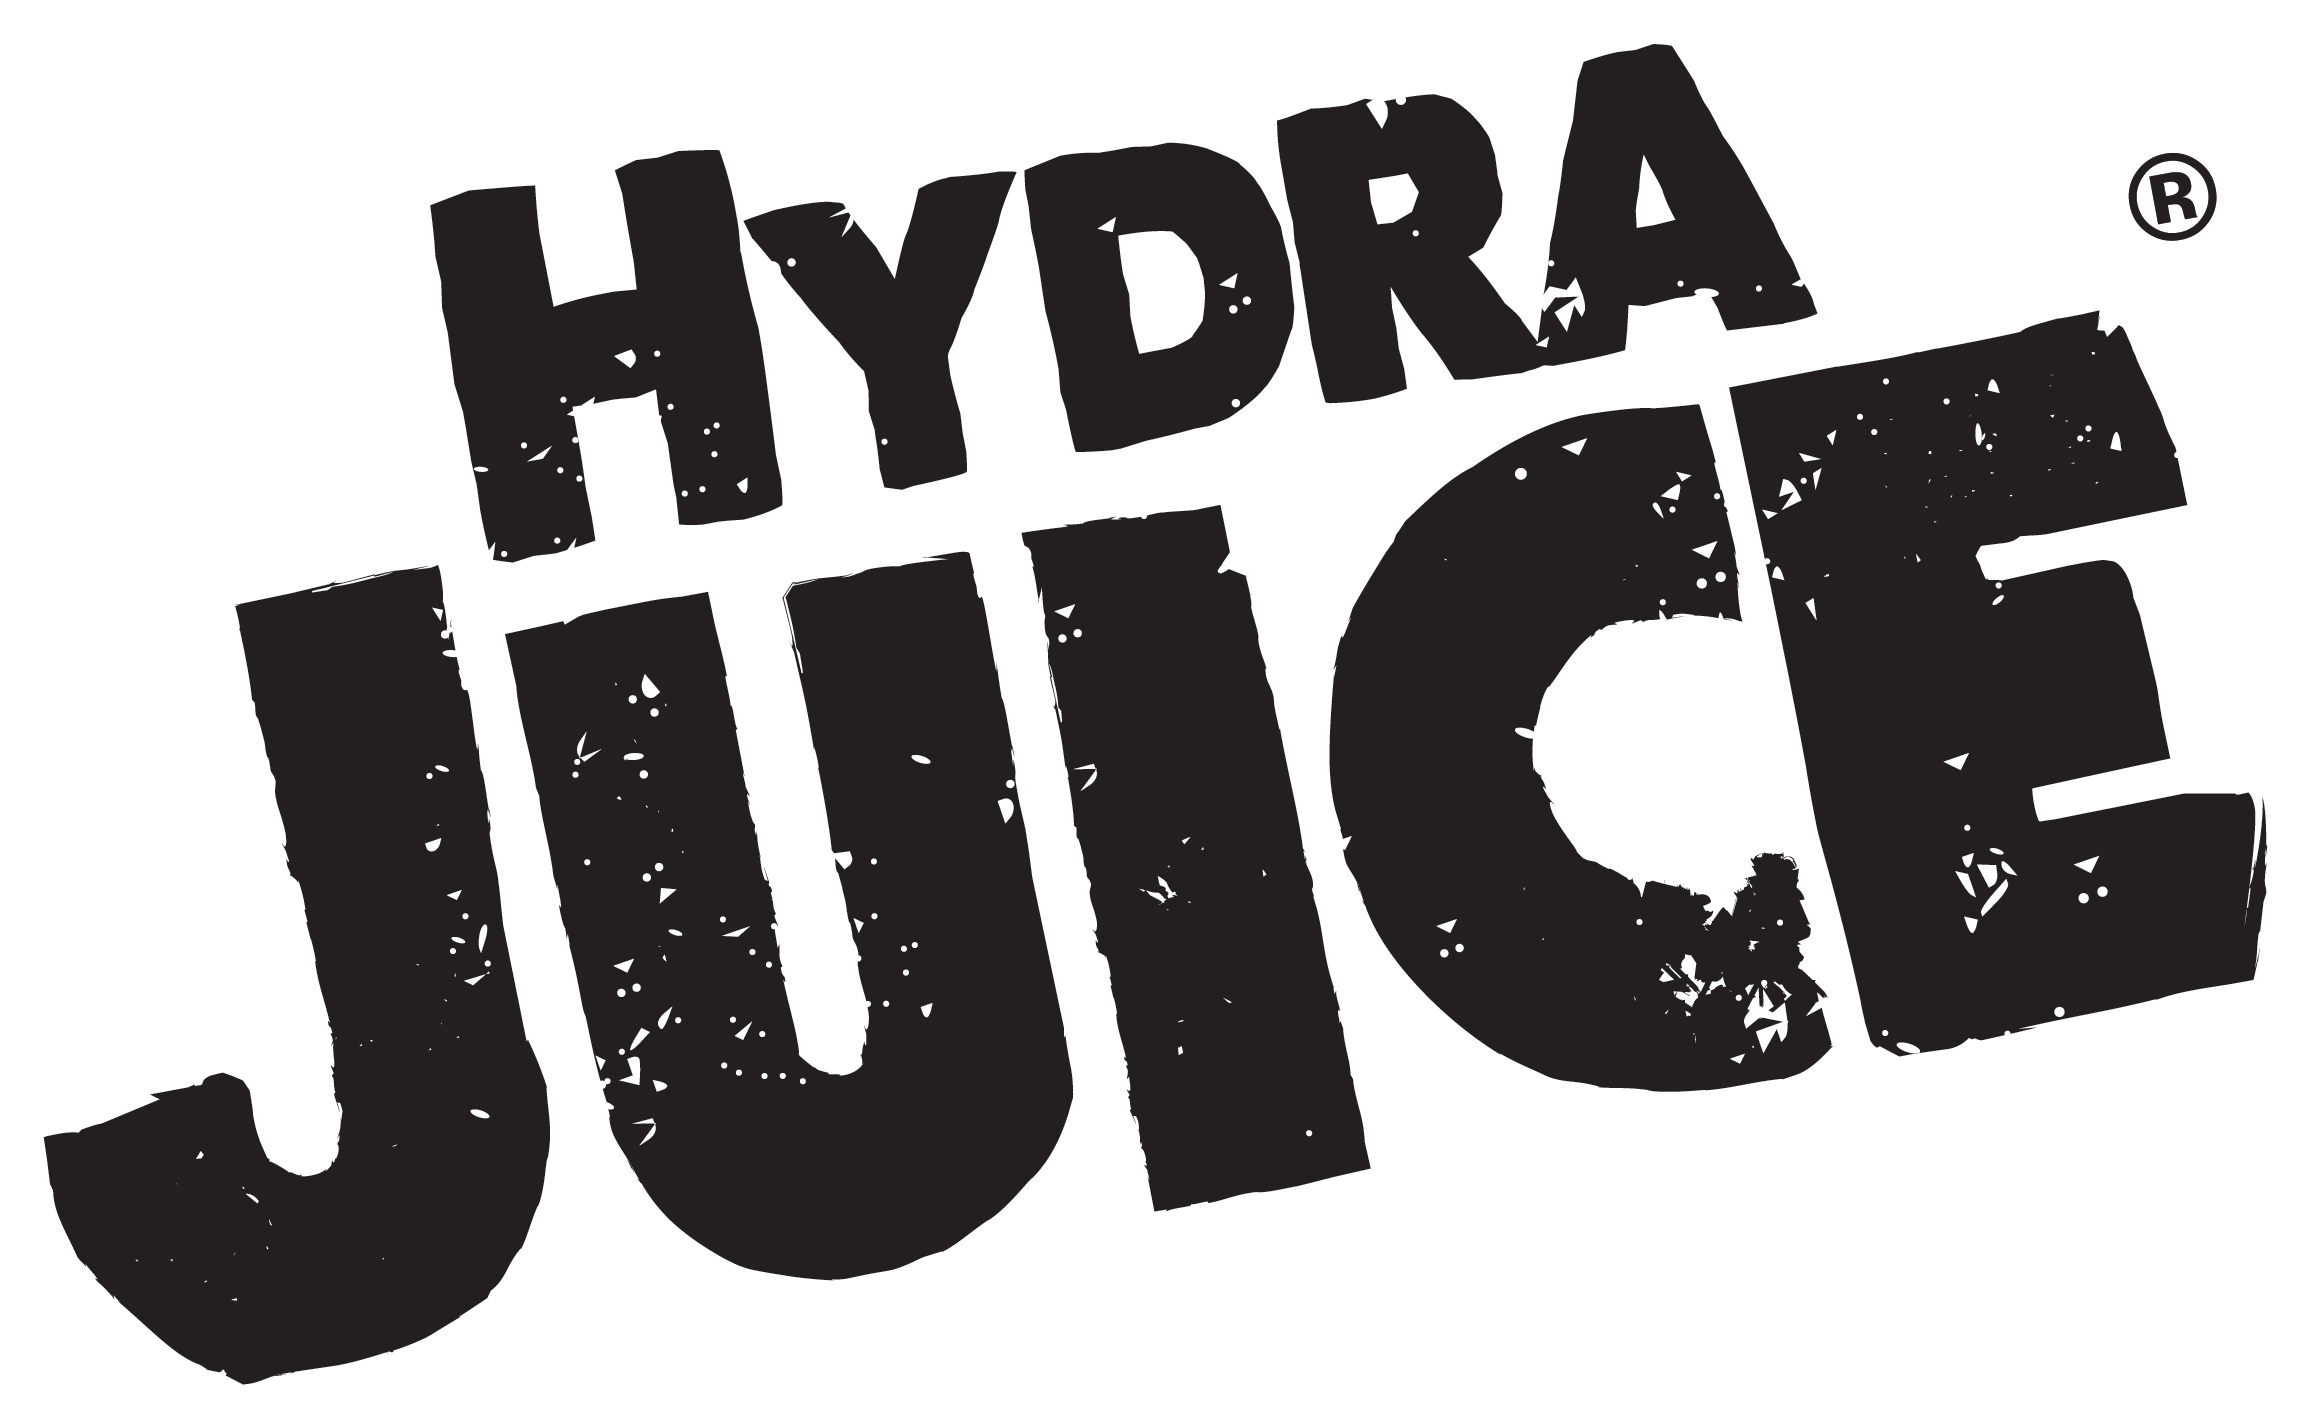 Hydra logo PNG image Transparente image